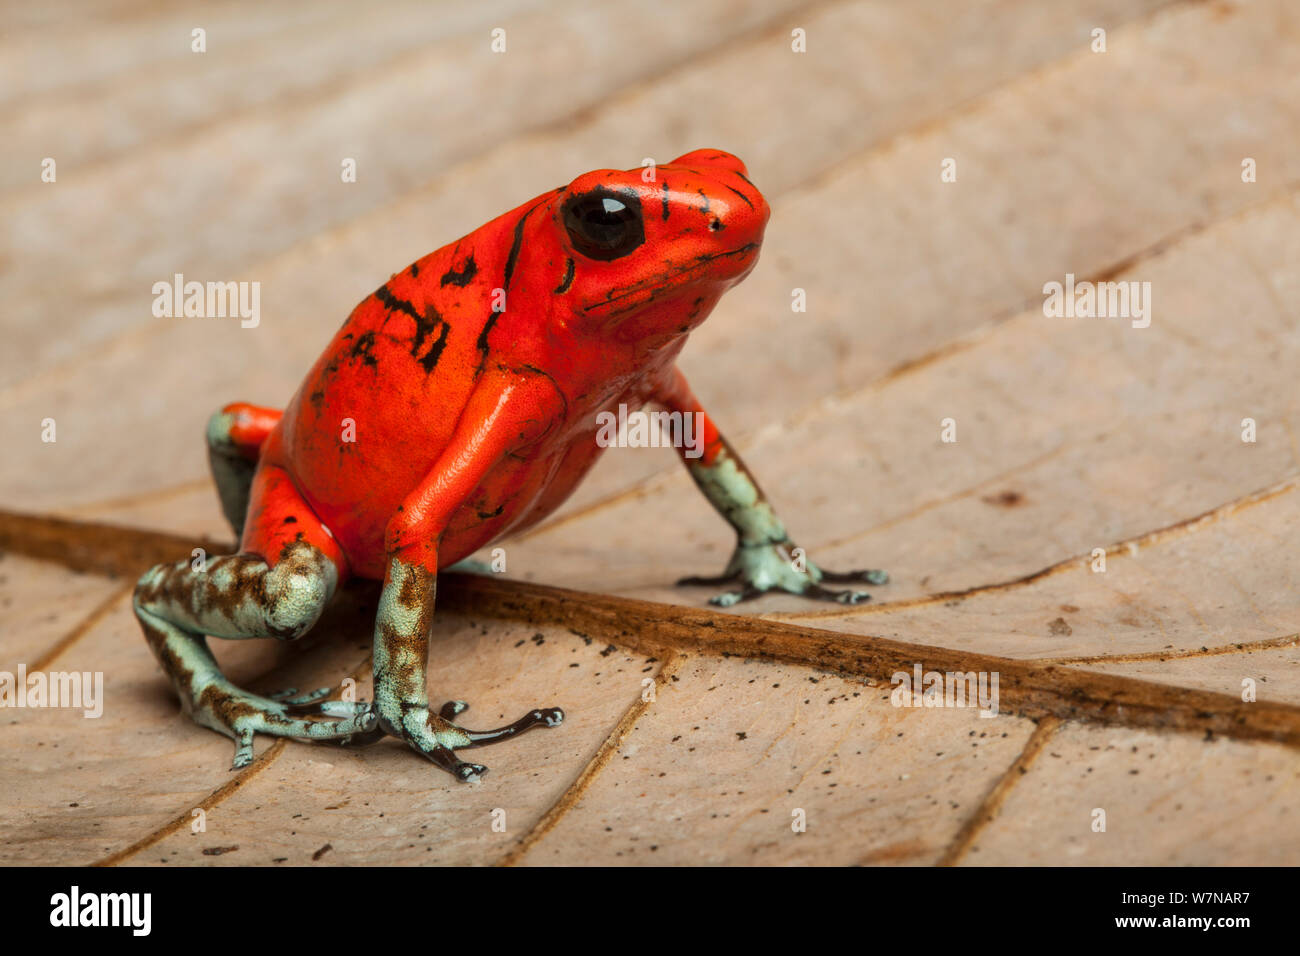 Arlequín poison dart frog (Oophaga histrionica), cautiva, nativos de Ecuador Foto de stock